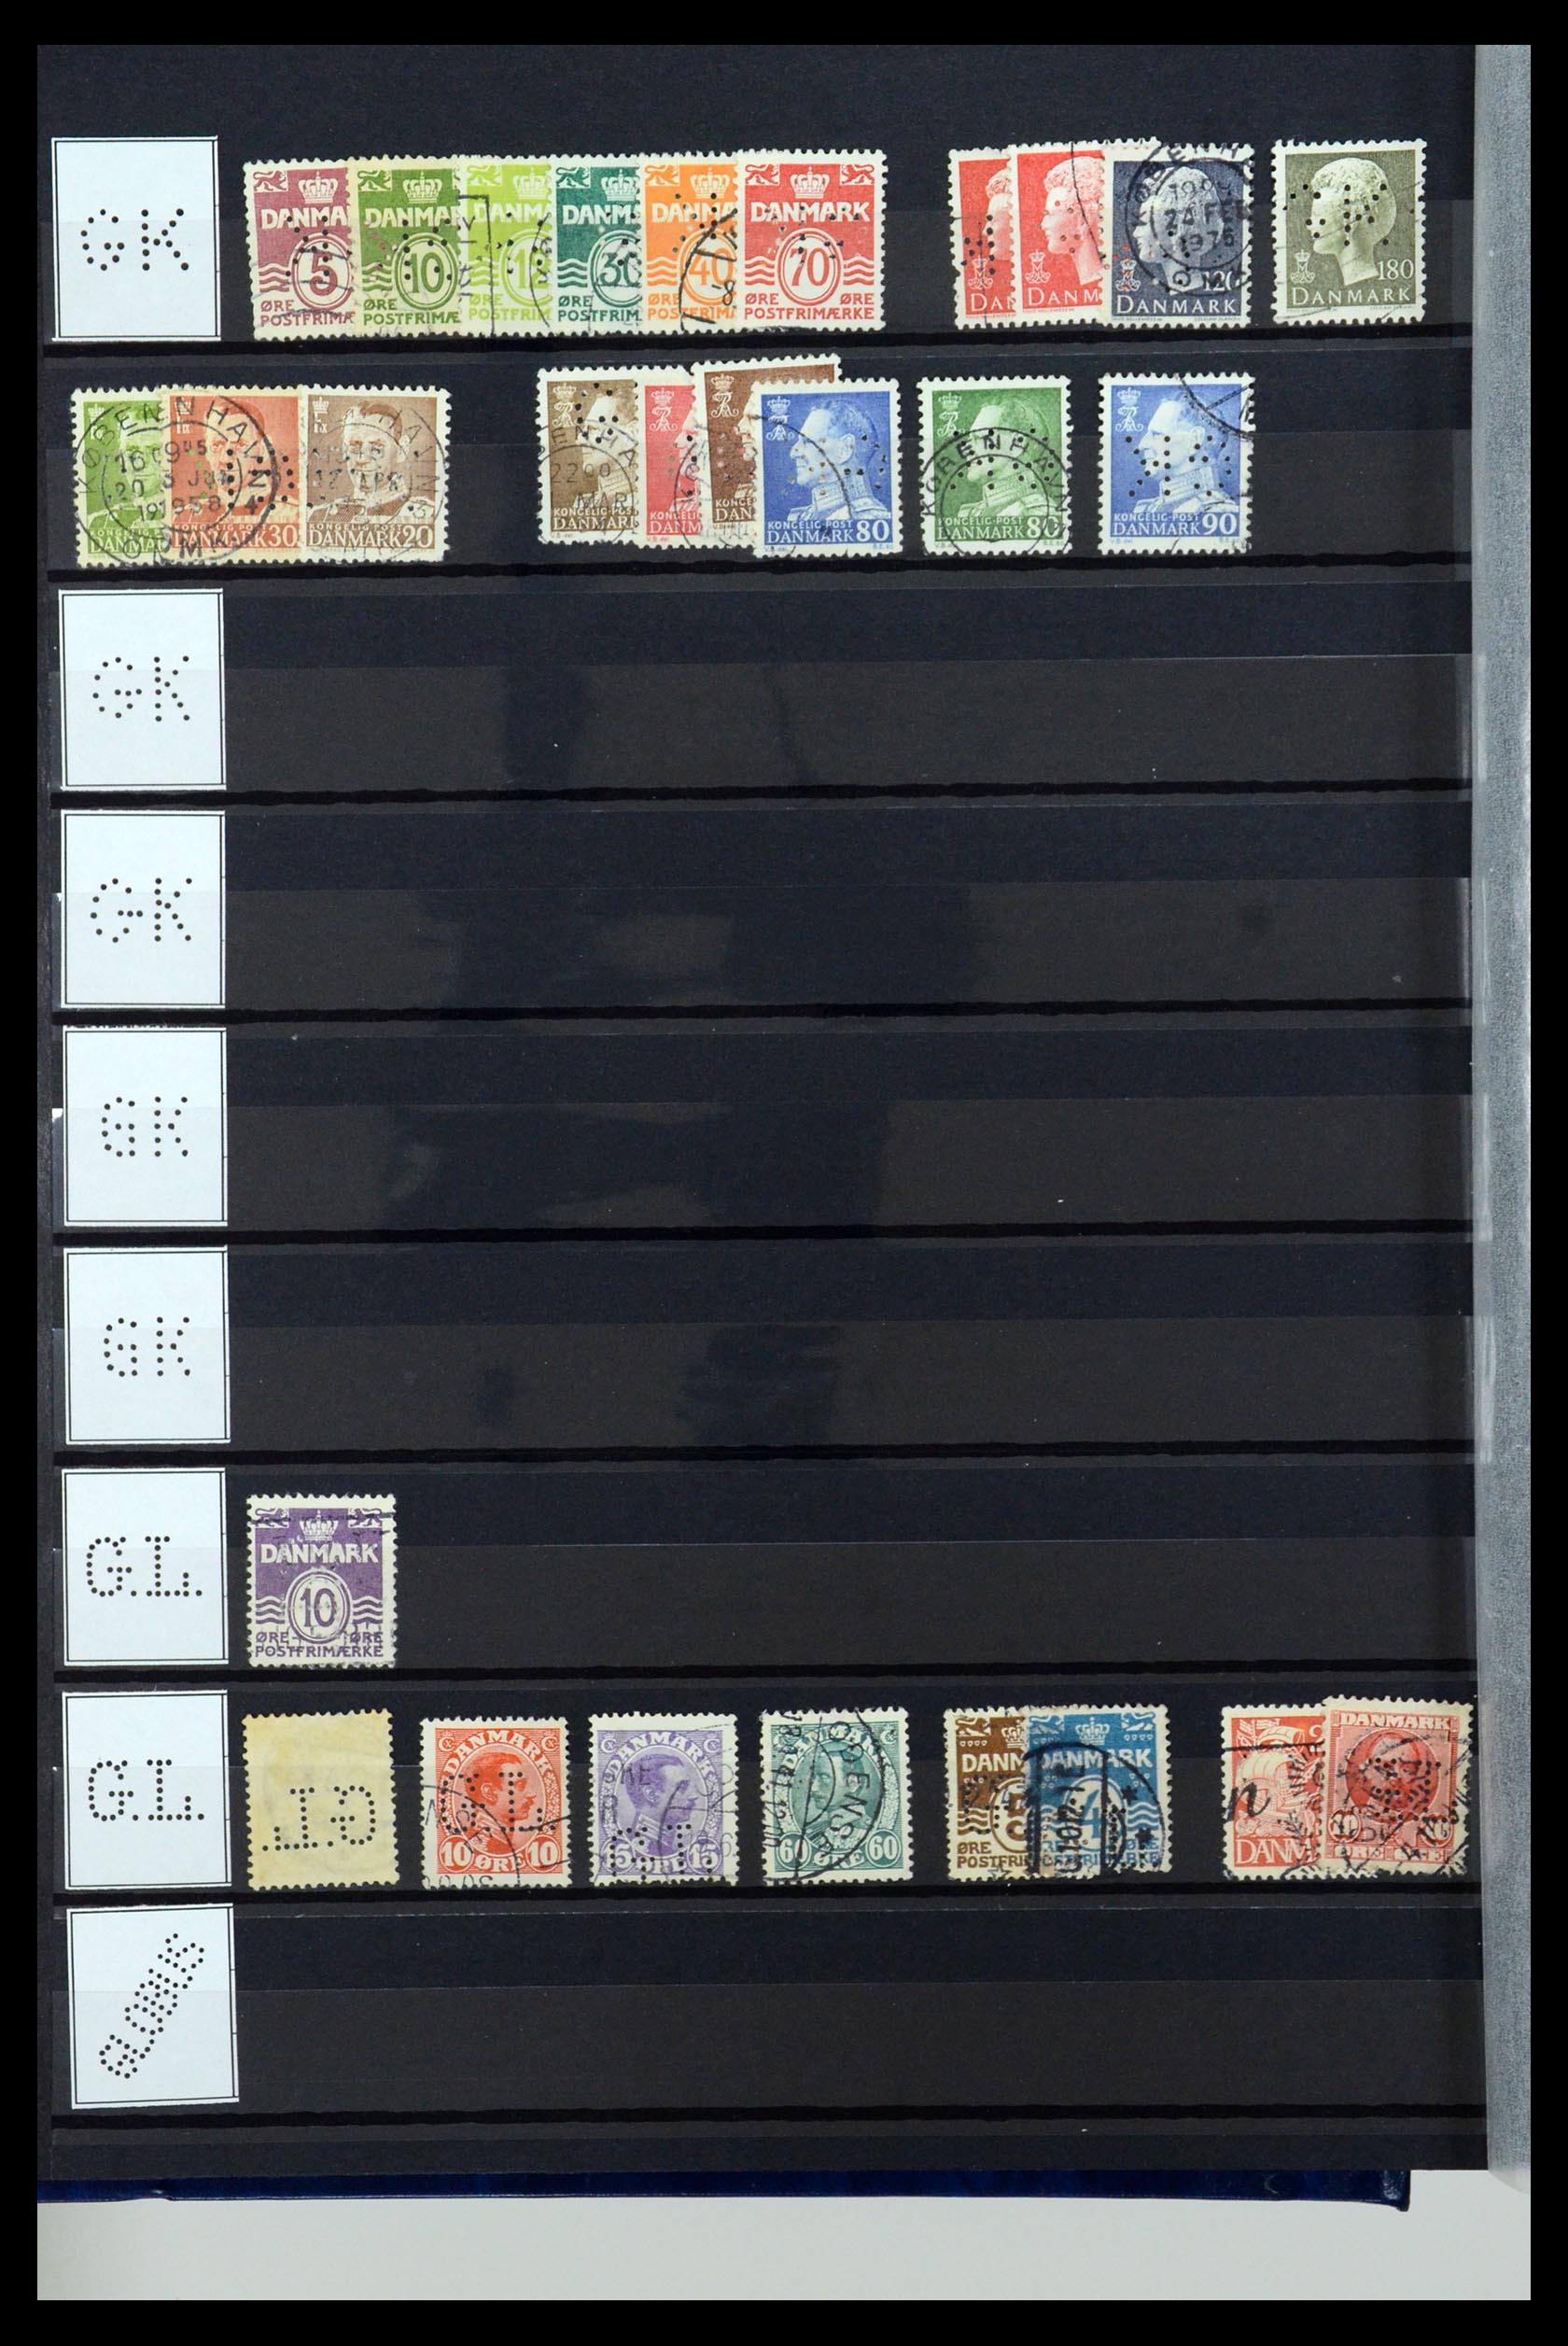 36396 119 - Stamp collection 36396 Denmark perfins.